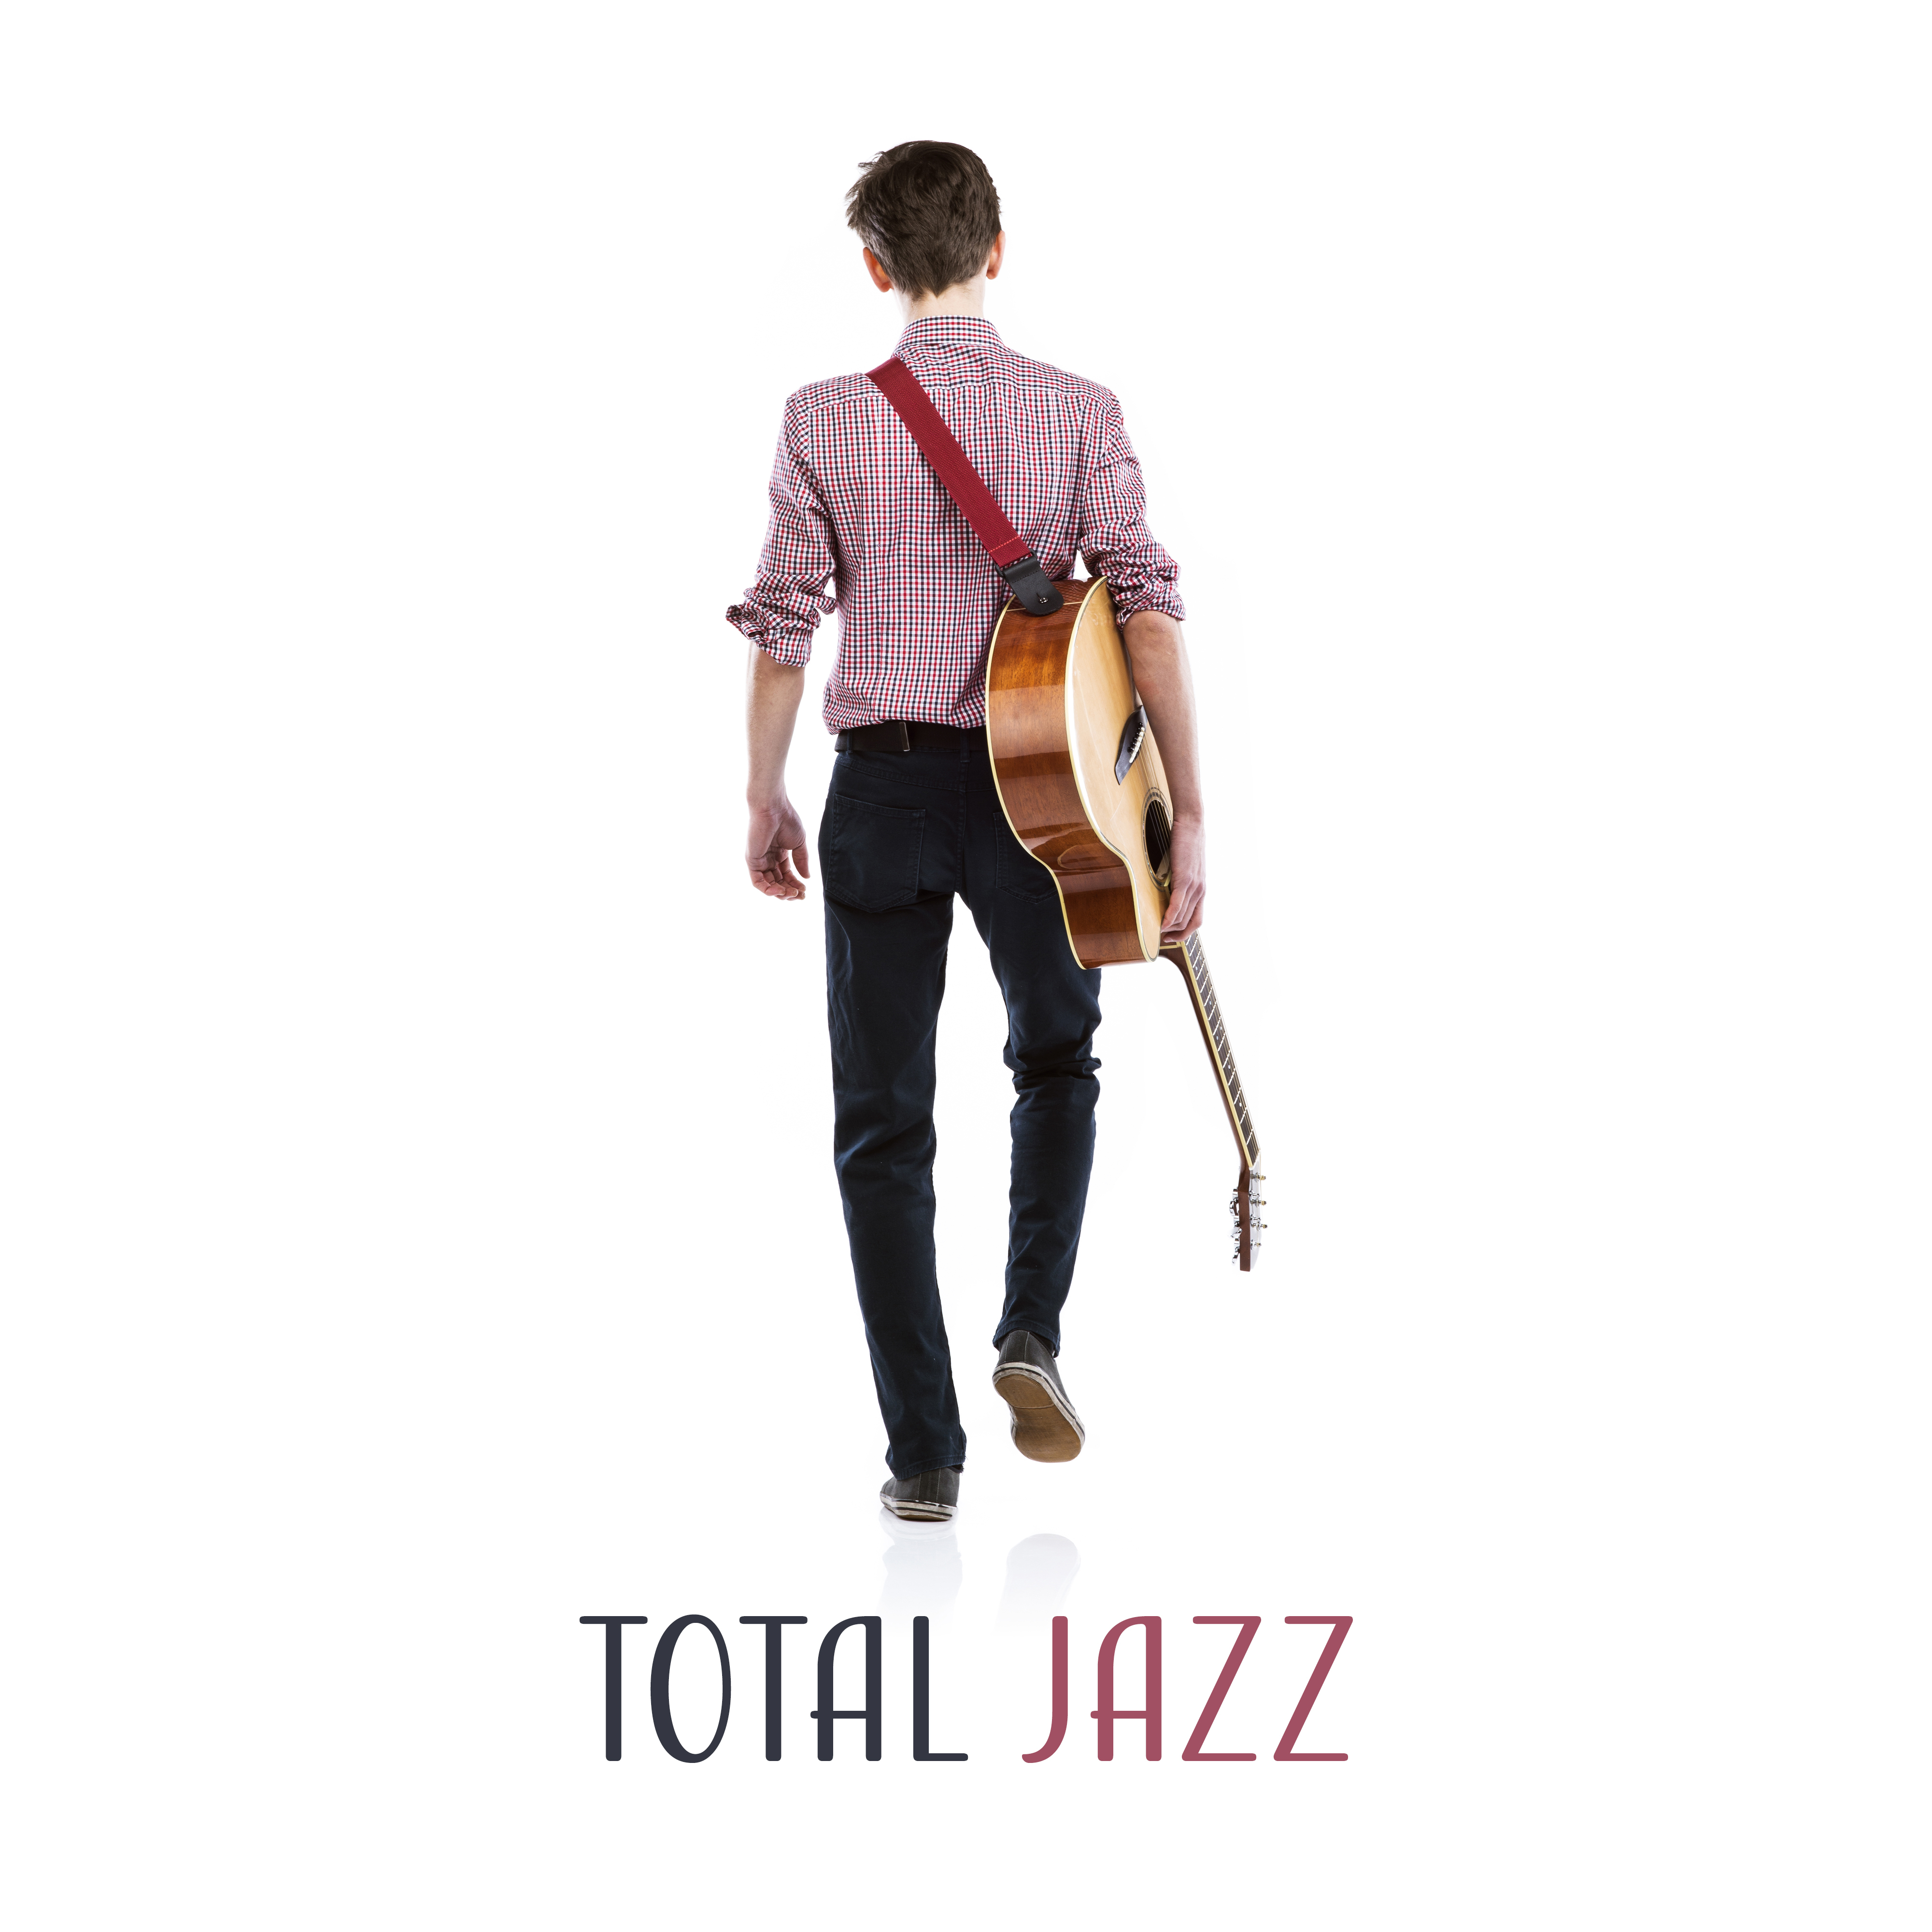 Total Jazz  Light Jazz, Instrumental Music, Ambient Lounge, Smooth Jazz Compilation 2017